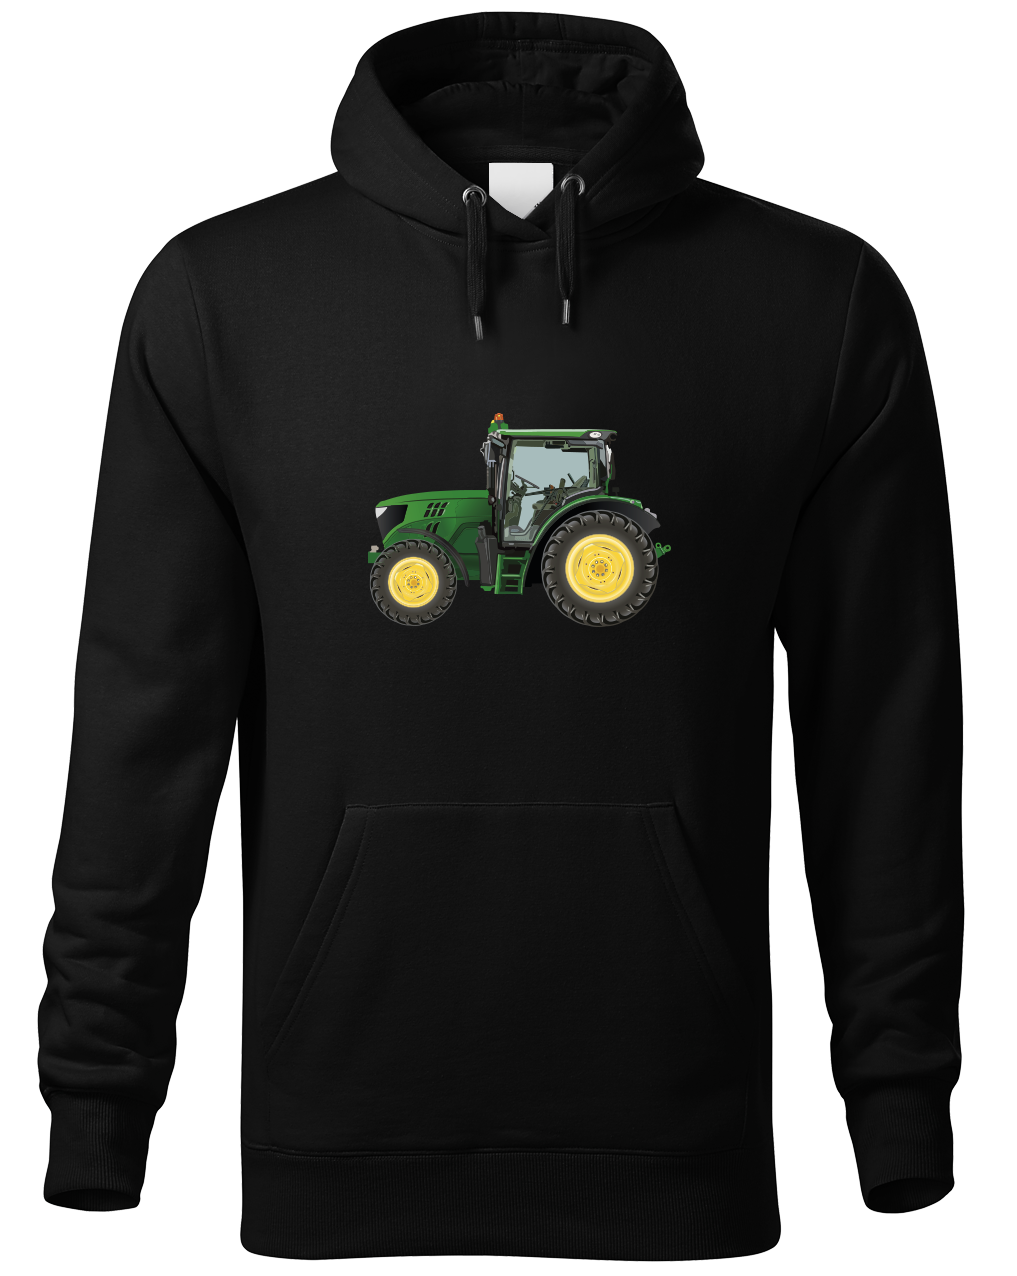 Mikina s traktorem - Zelený traktor Velikost: L, Barva: Černá